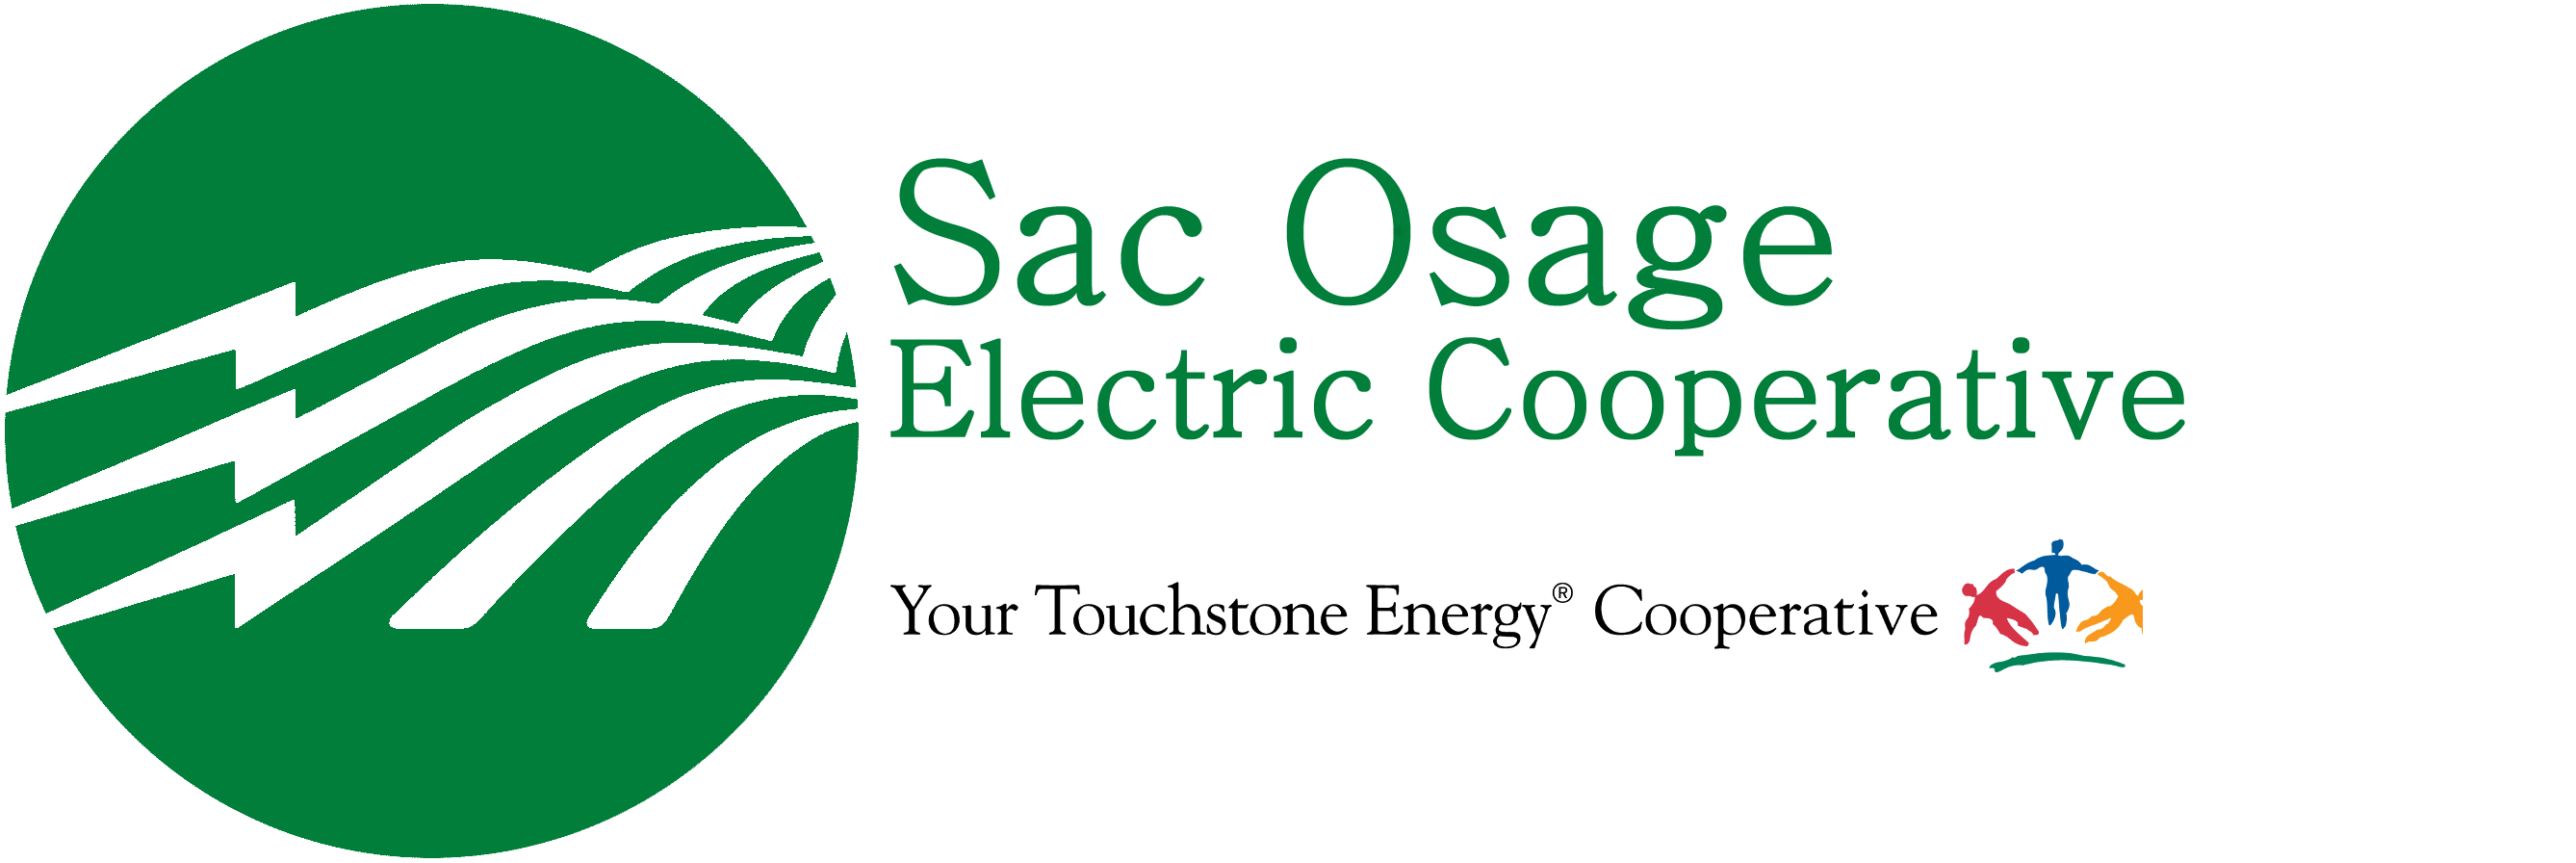 rebate-programs-sac-osage-electric-cooperative